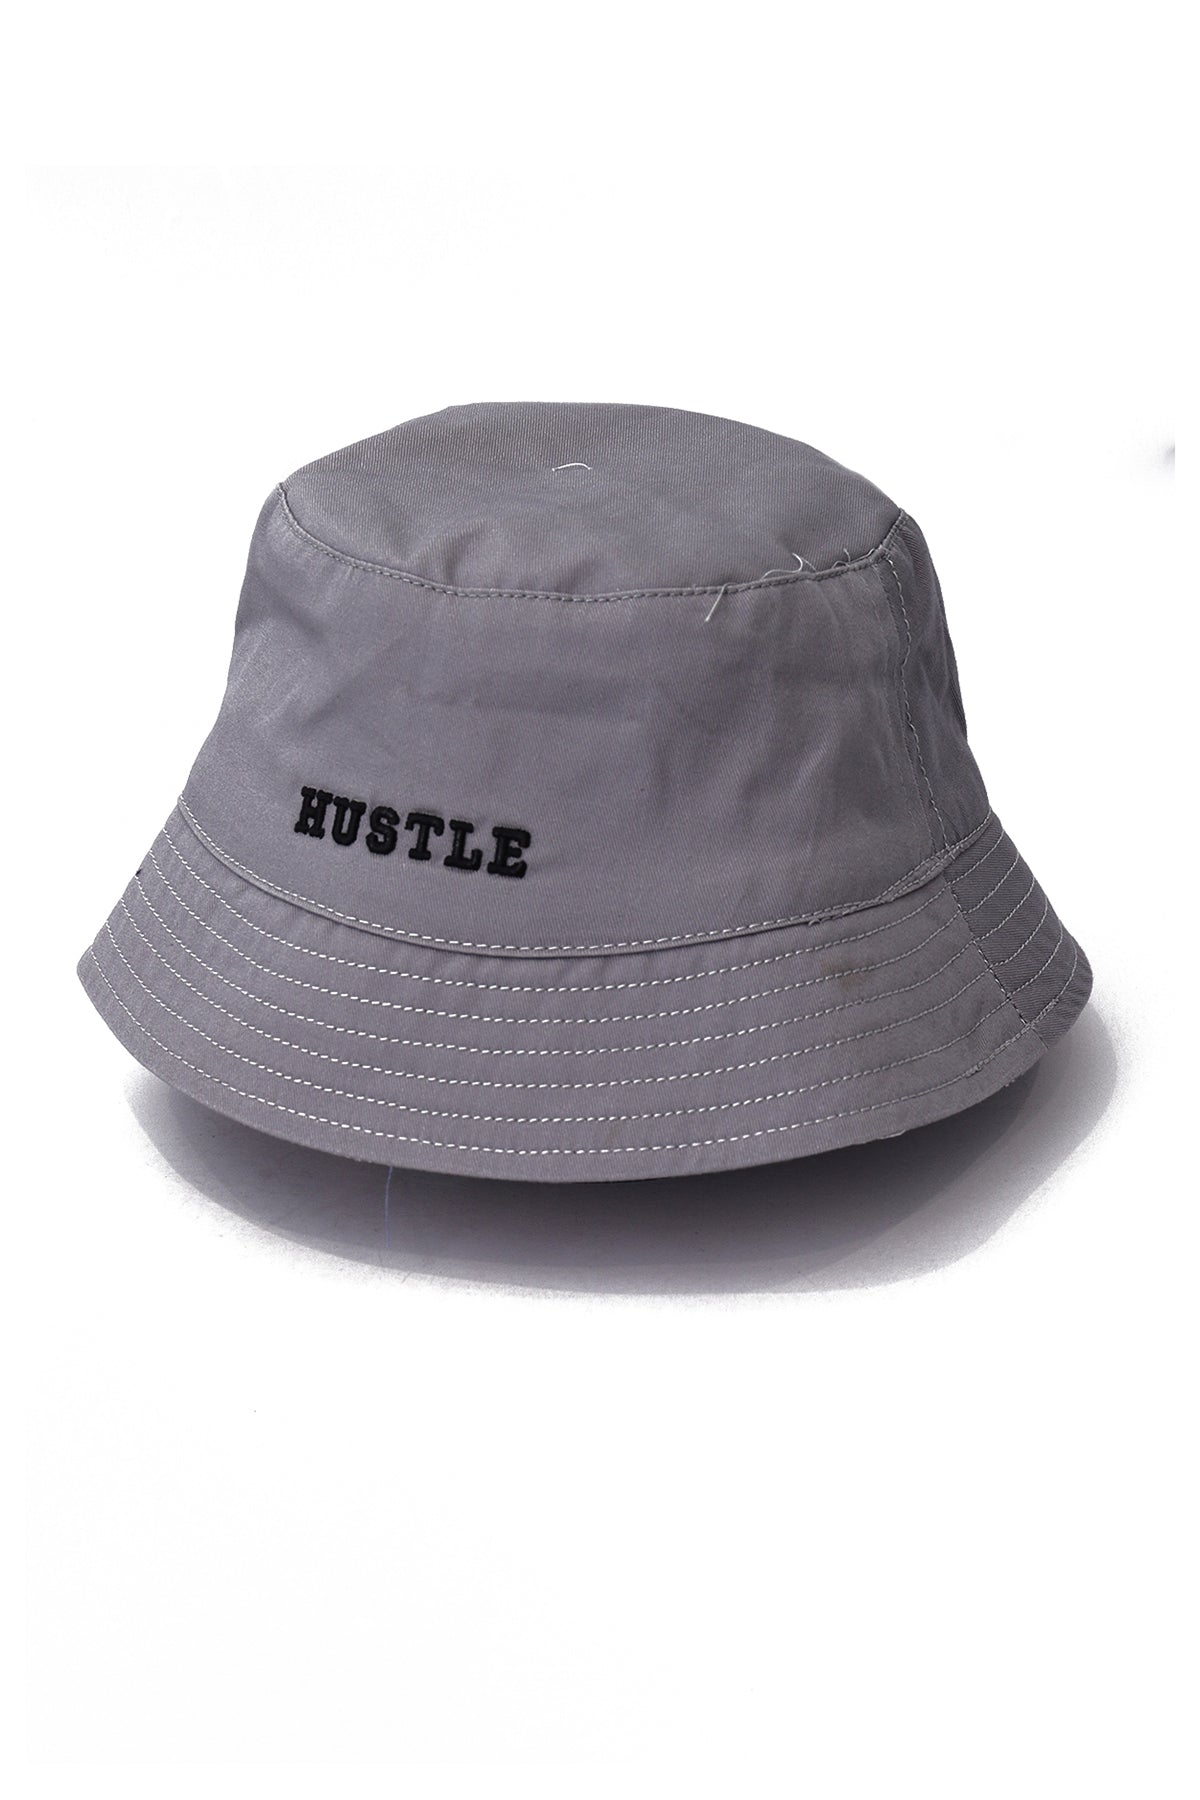 Hustle Men's Bucket Hat